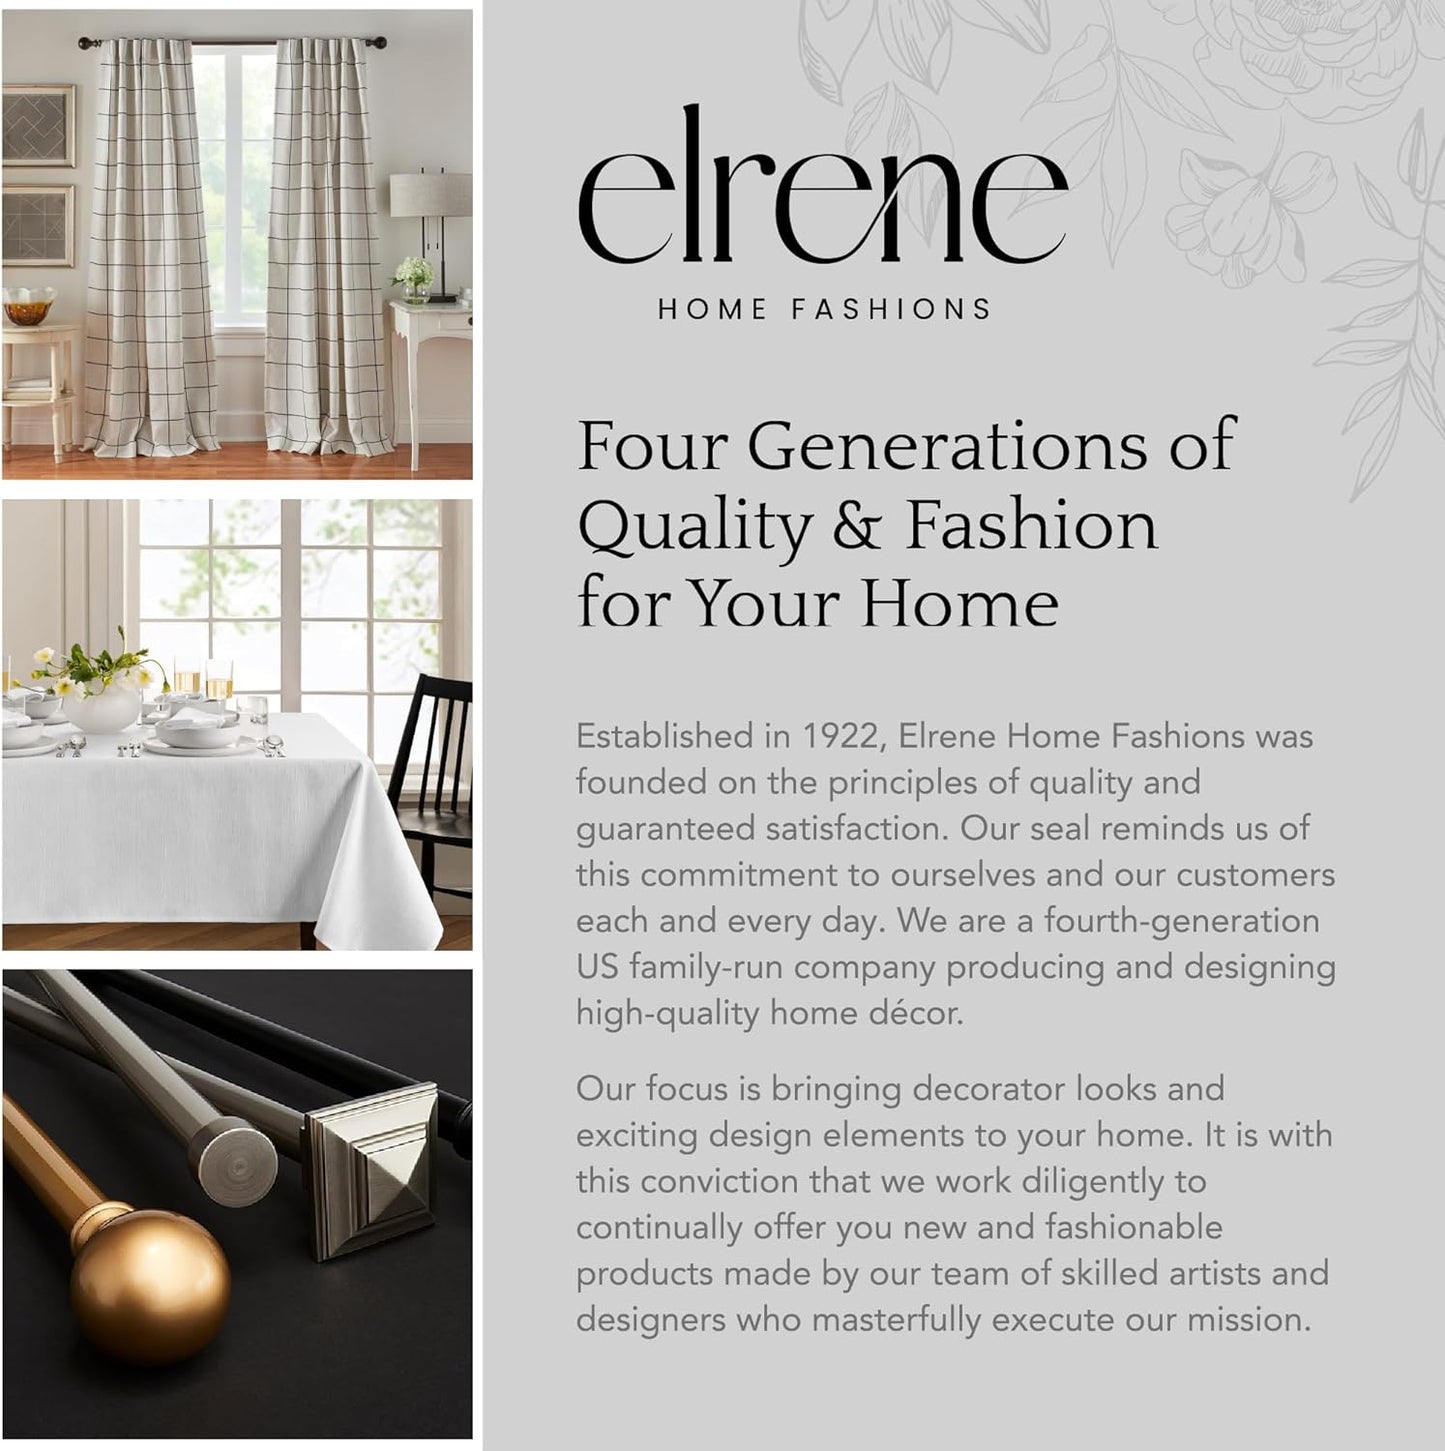 Elrene Home Fashions Harrow Solid Texture Blackout Single Window Curtain Panel, 52"X84", Natural  Elrene Home Fashions   